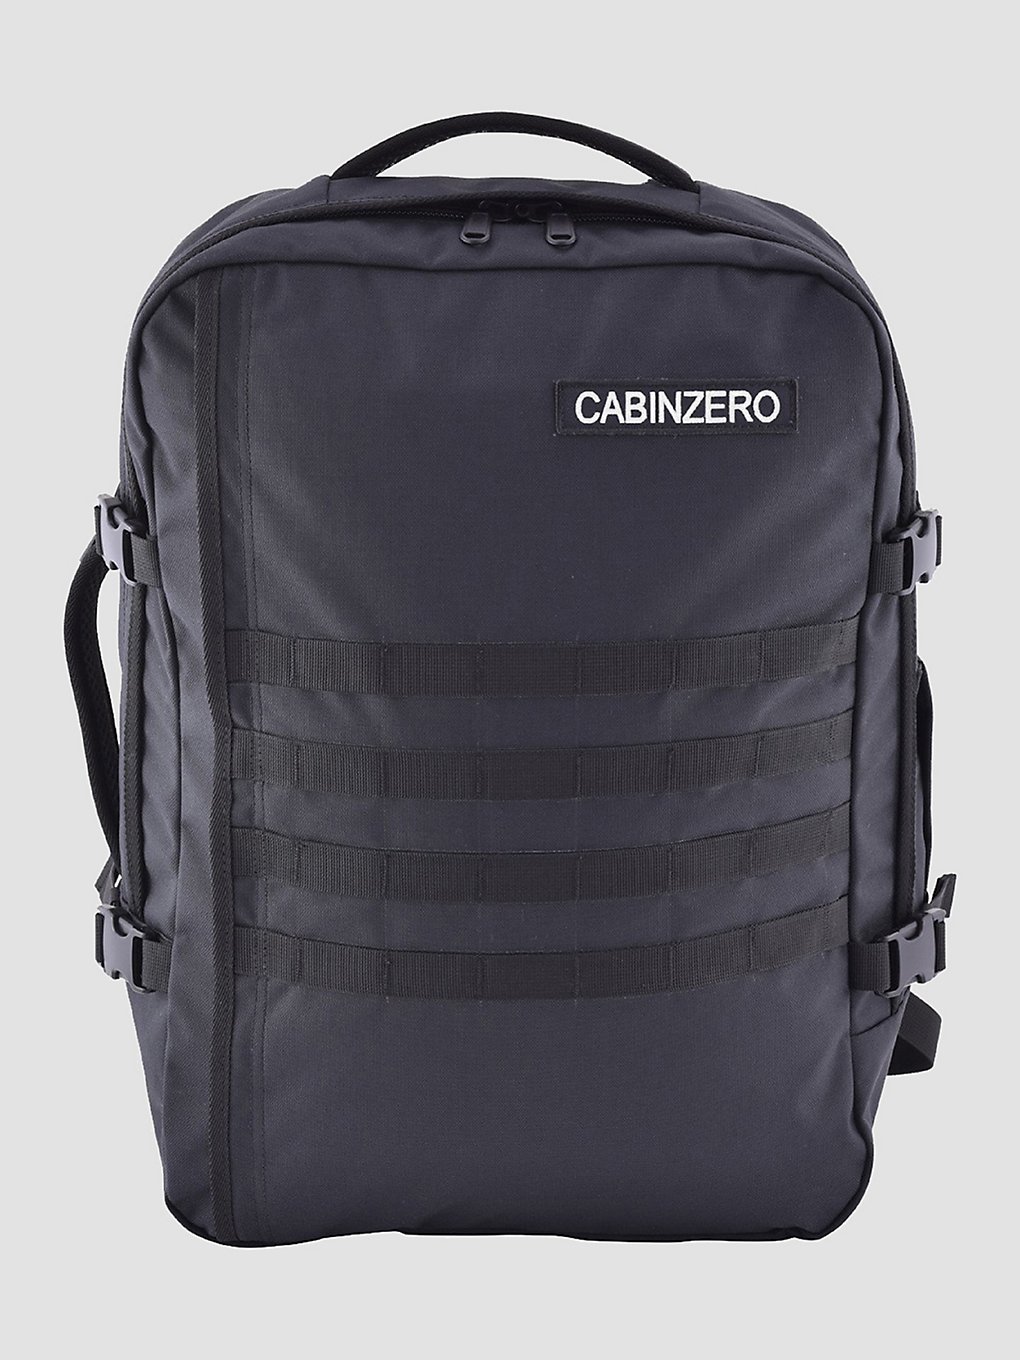 Cabin Zero Military 44L Ultra Light Cabin Backpack absolute black kaufen